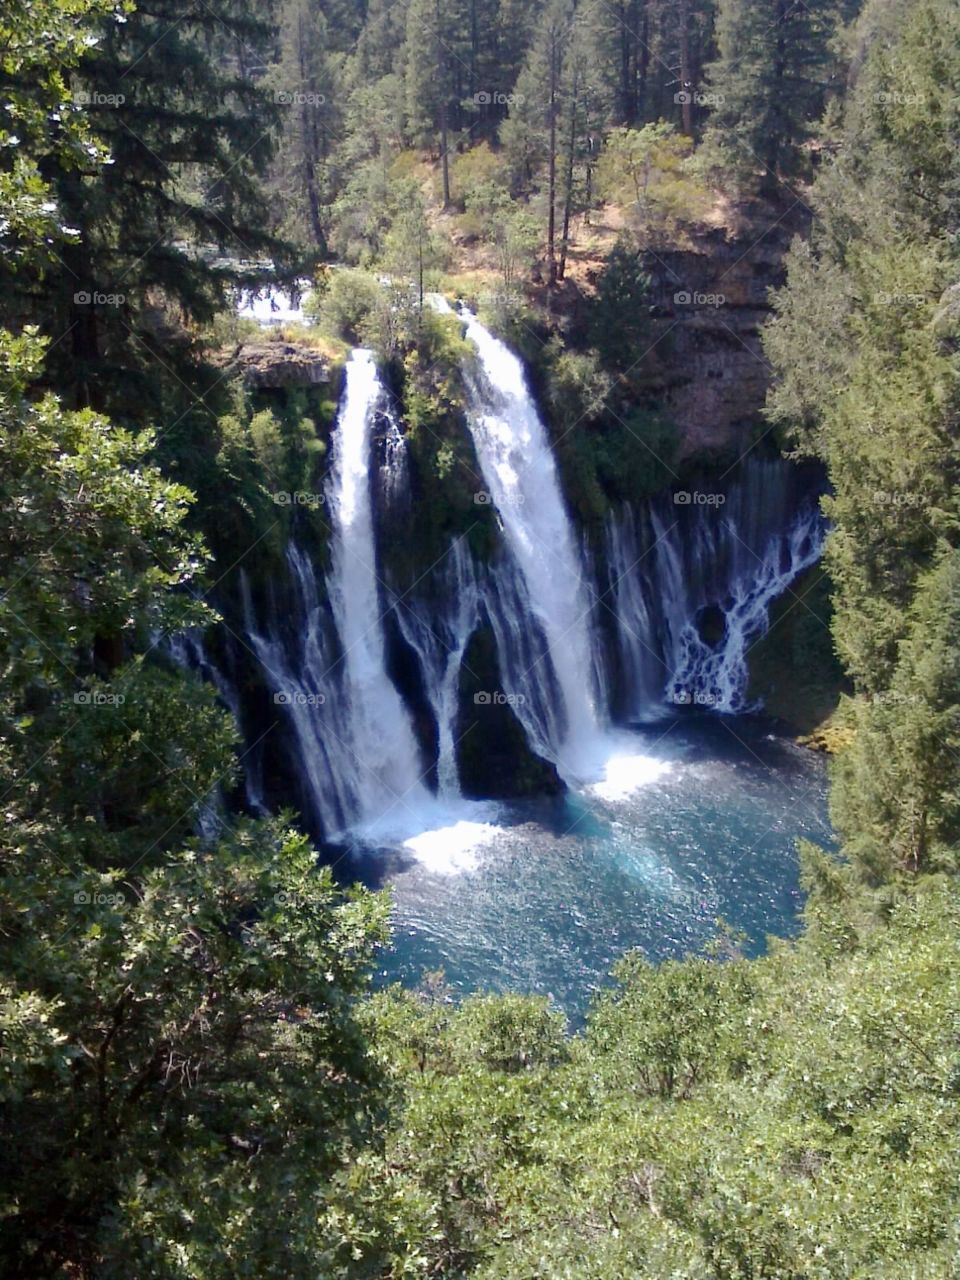 Burney Falls, CA . One of my favorite places, Burney Falls, CA 